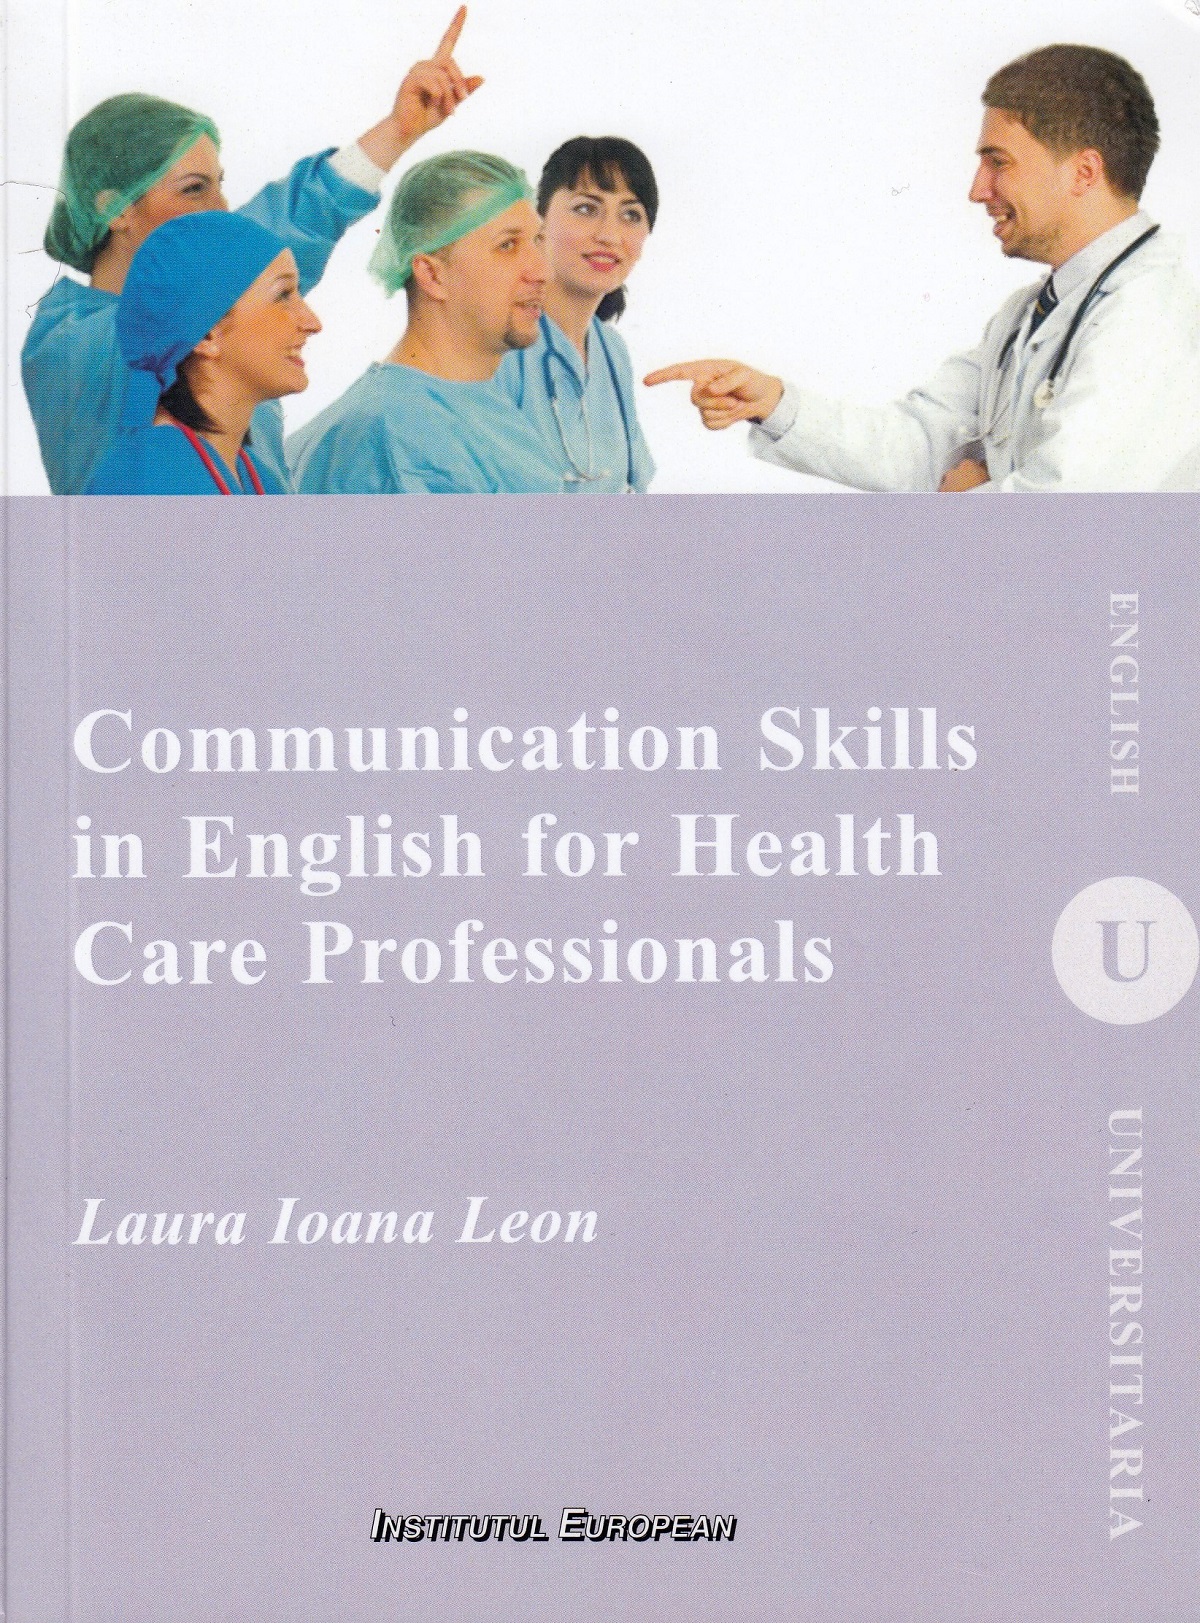 Communication Skills in English for Health Care Professionals - Laura Ioana Leon